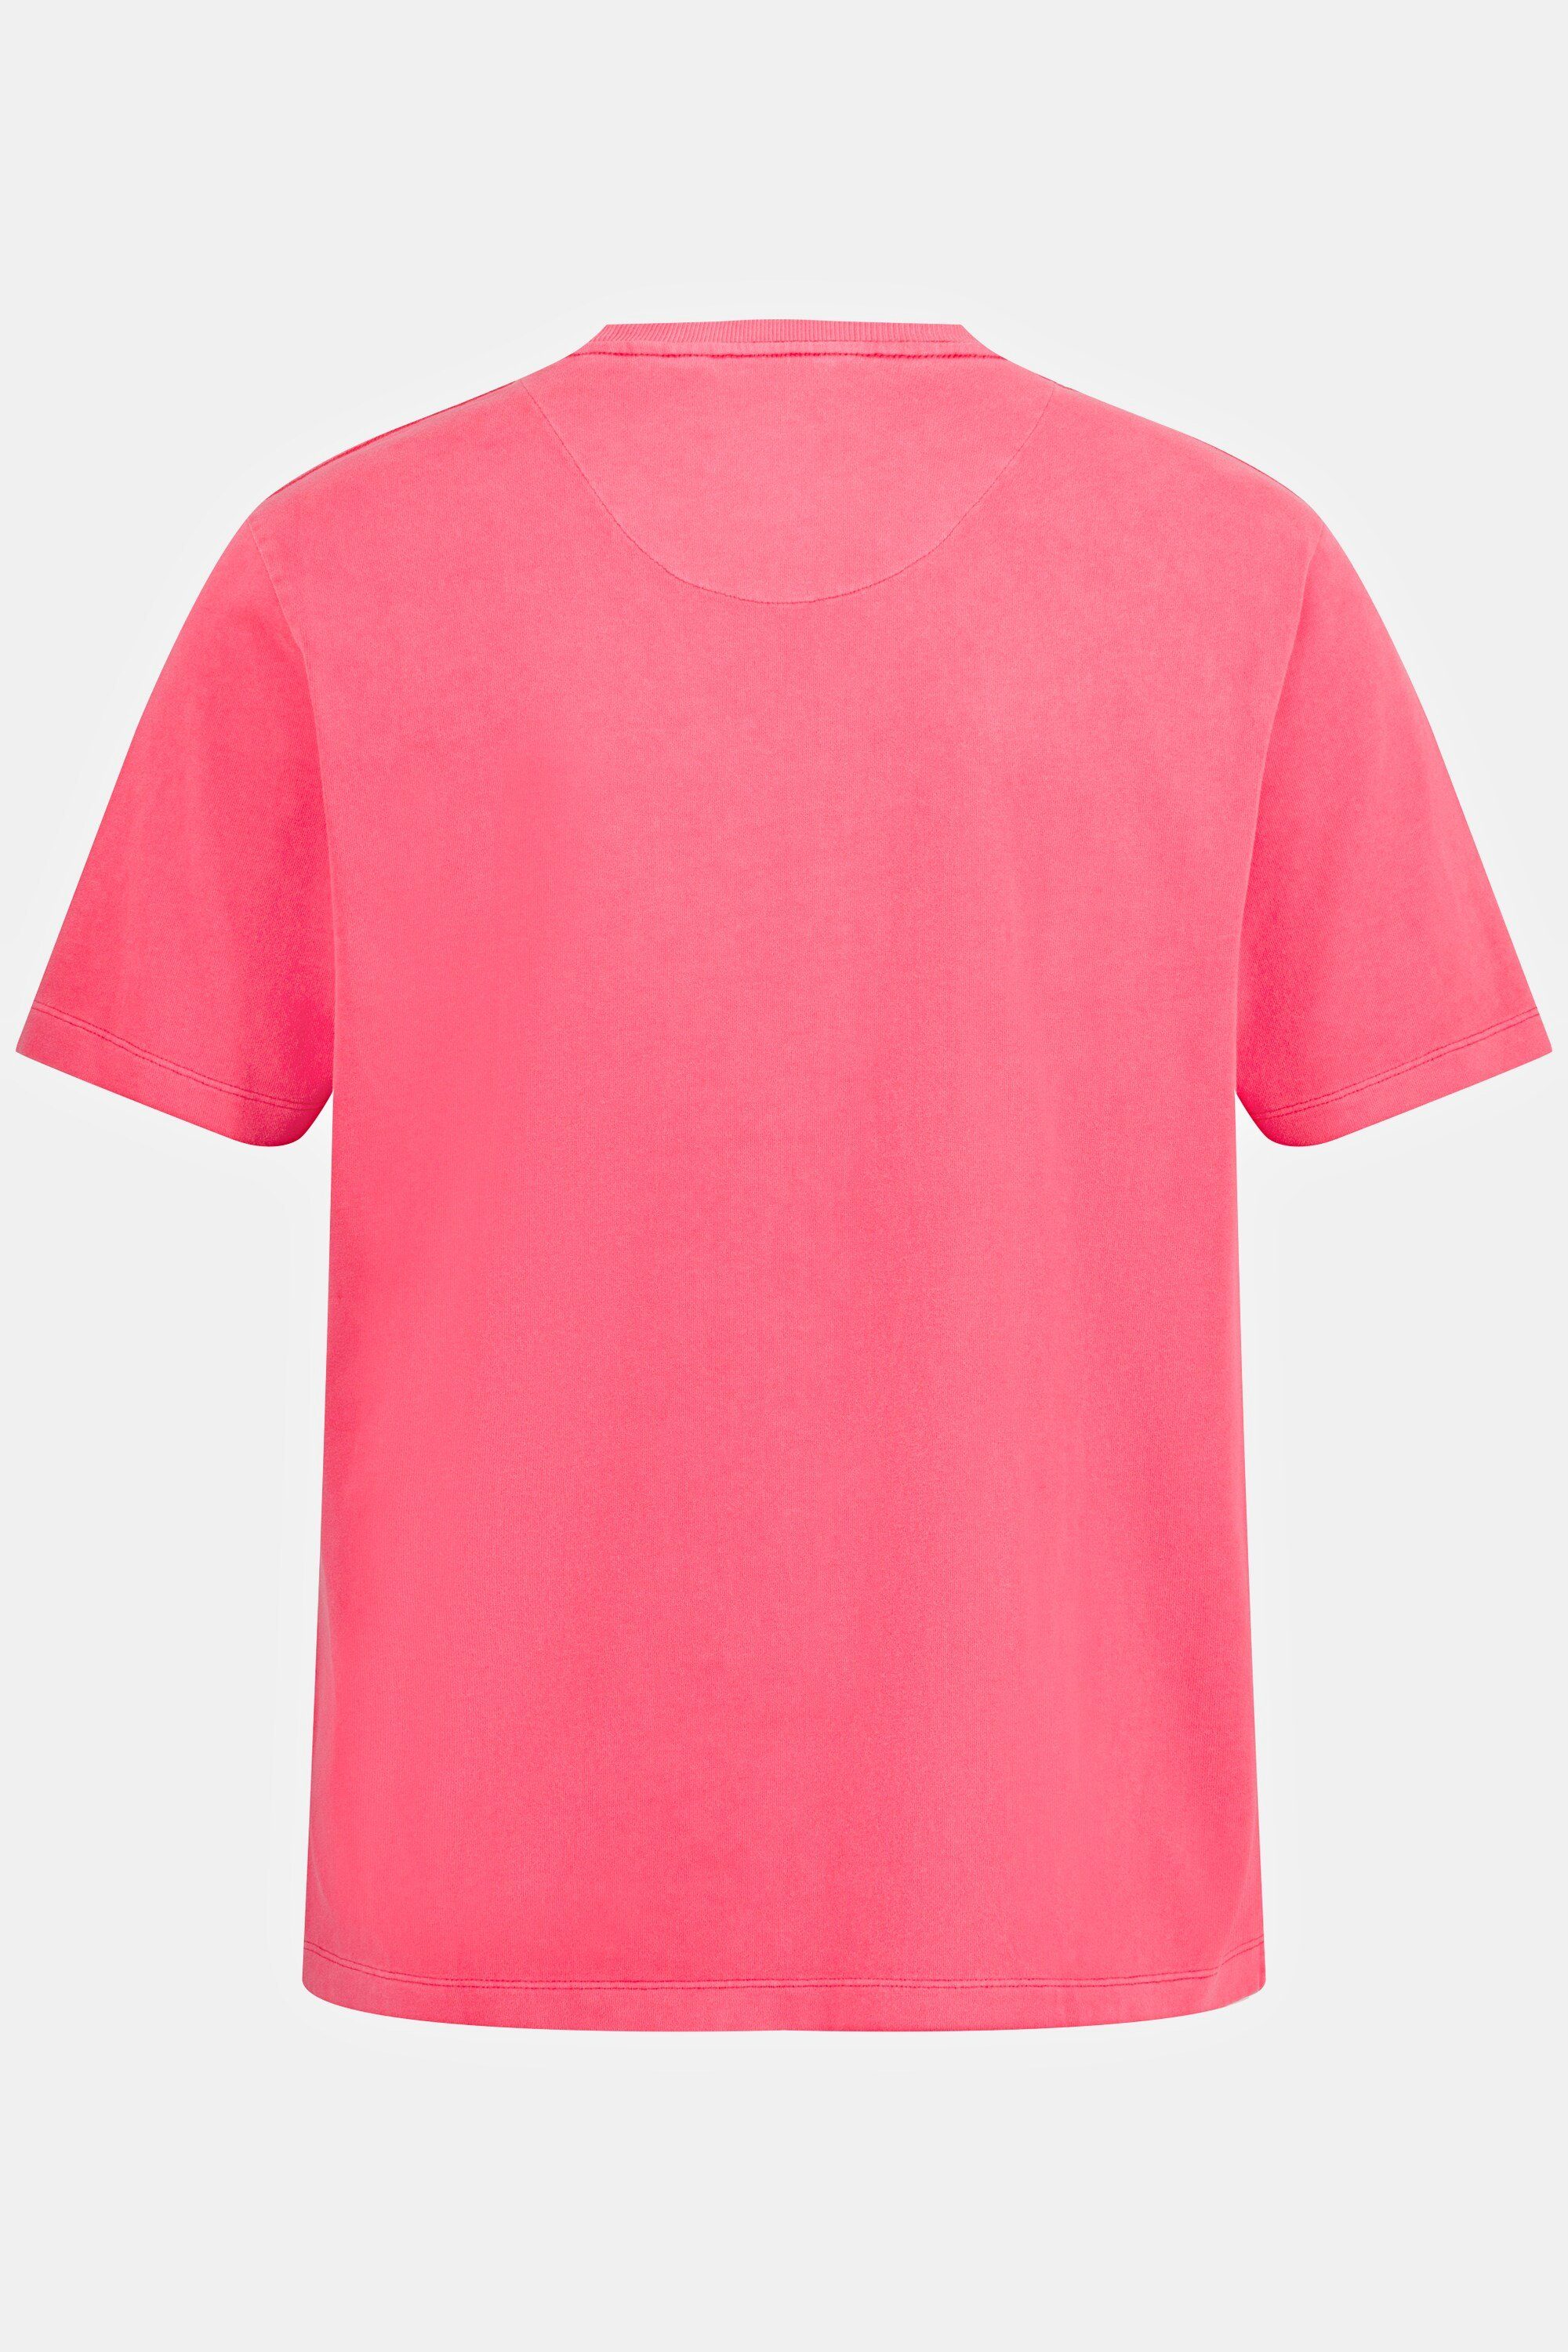 Halbarm Rundhals JP1880 T-Shirt Print rot T-Shirt Vintage-Look